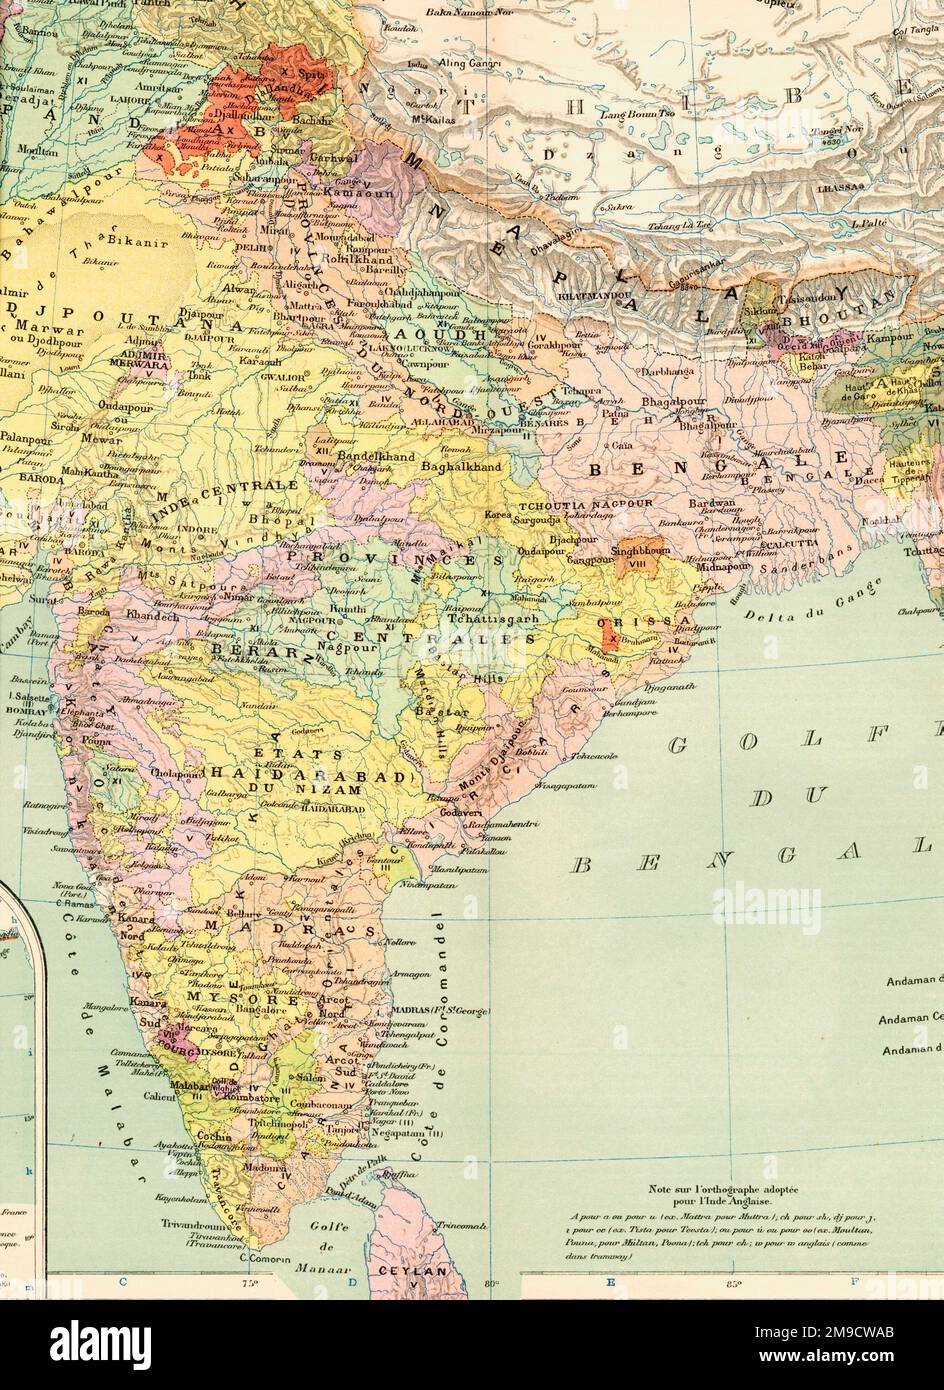 19th century Map of India Stock Photo